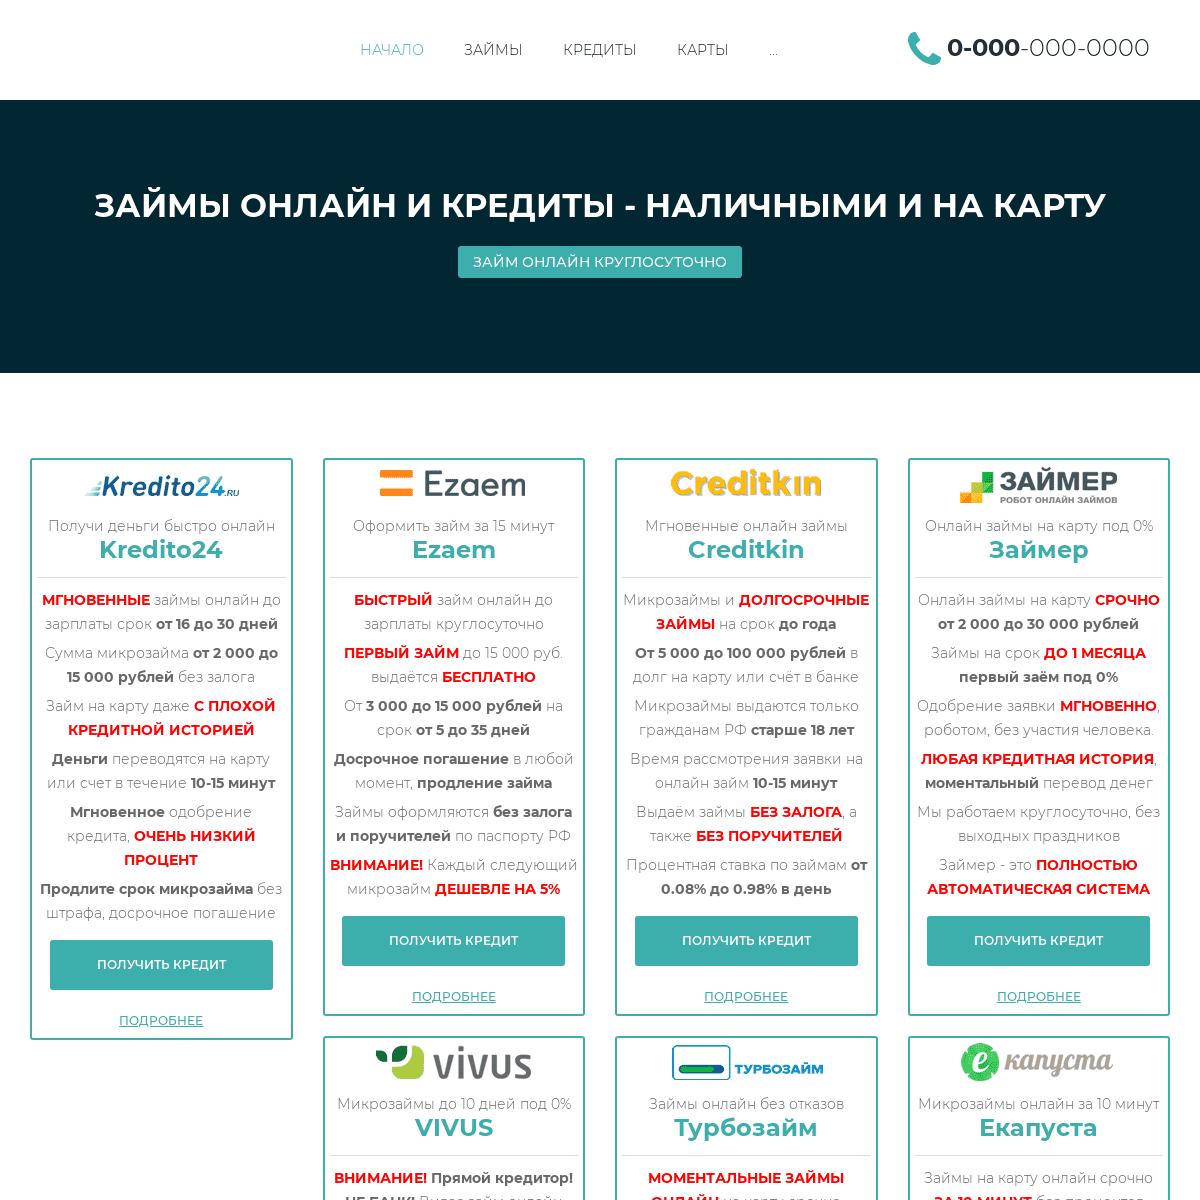 A complete backup of https://credit-n.ru